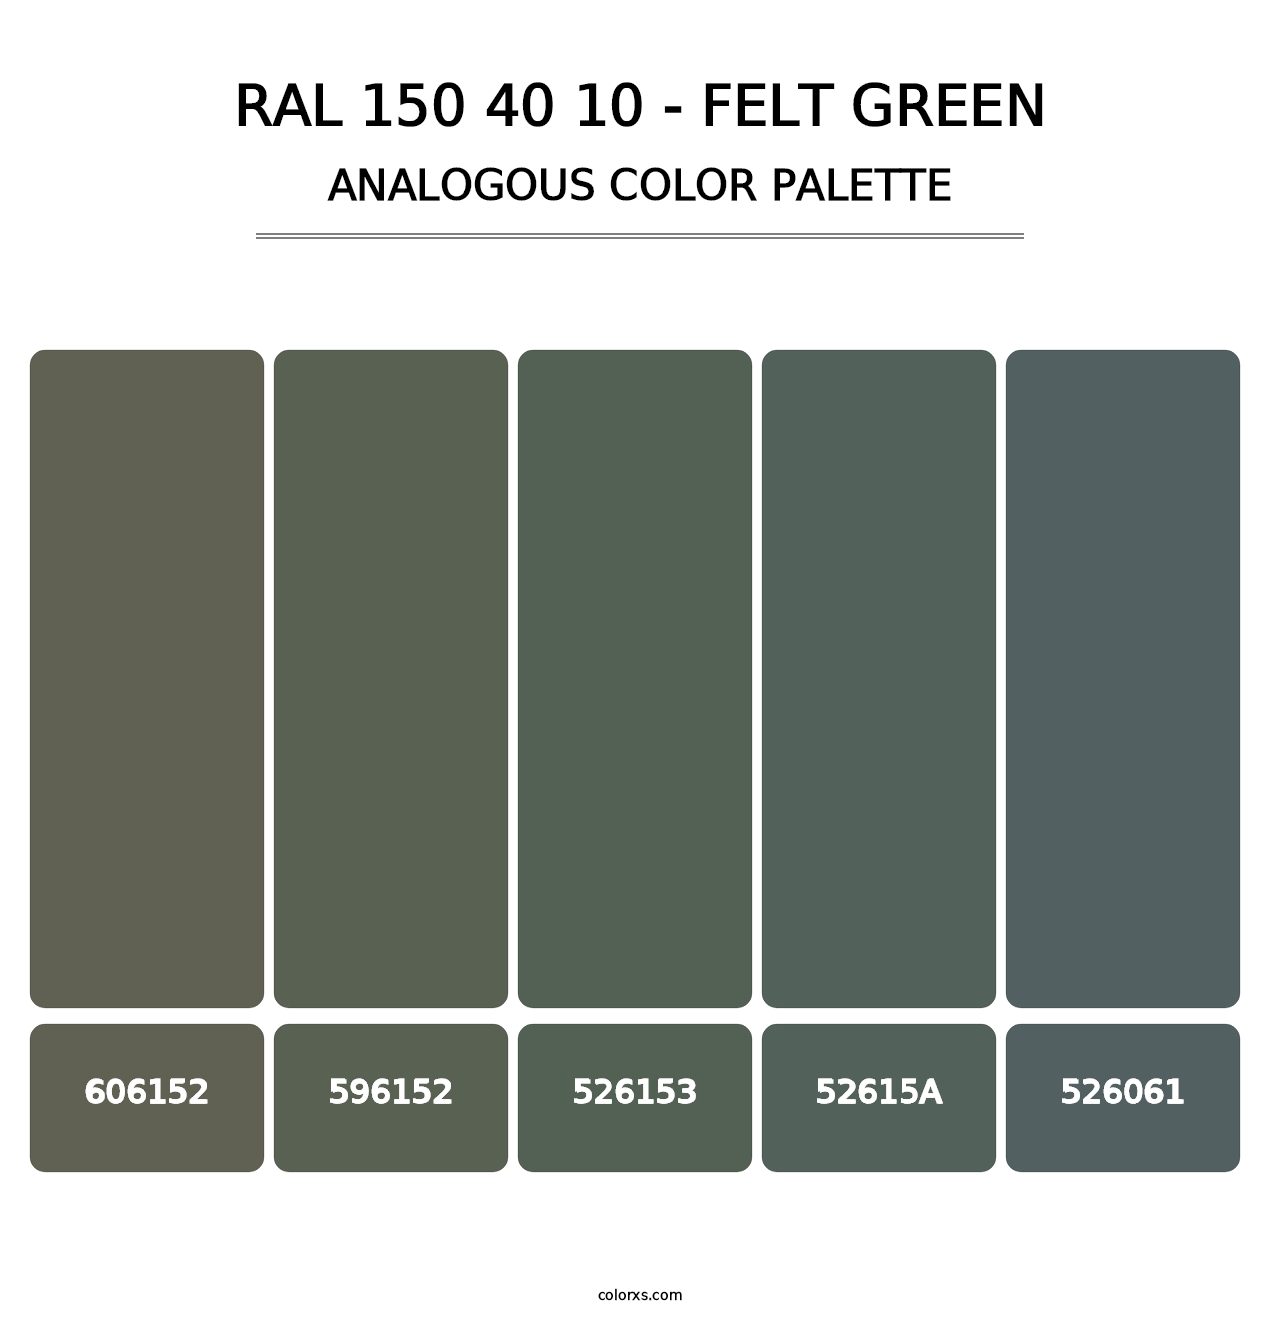 RAL 150 40 10 - Felt Green - Analogous Color Palette